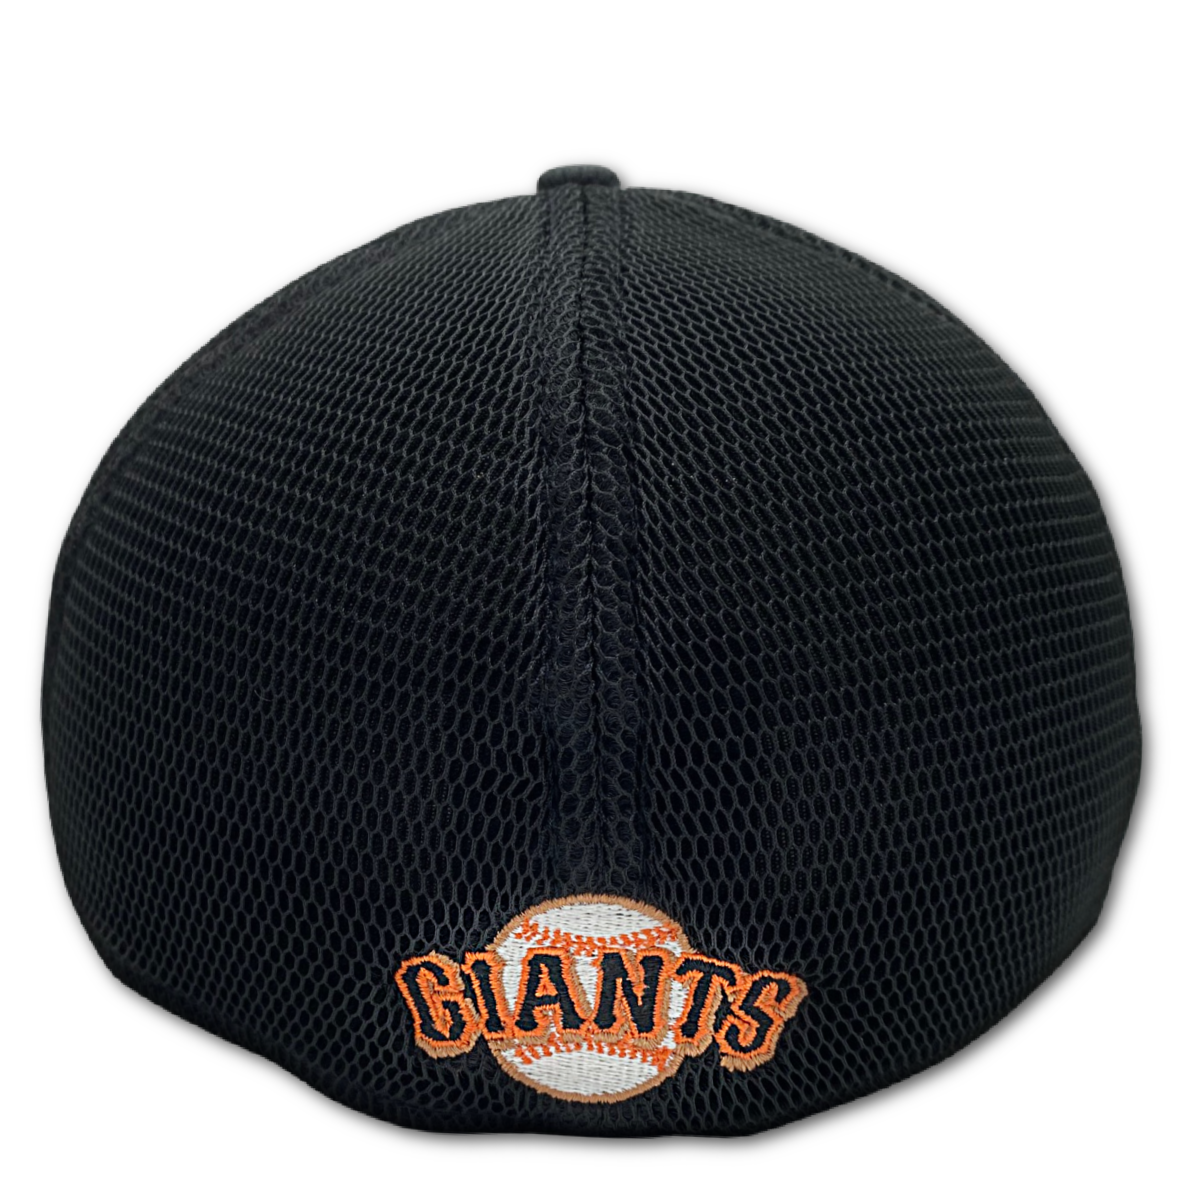 San Francisco Giants Team Mesh 39THIRTY- black/orange